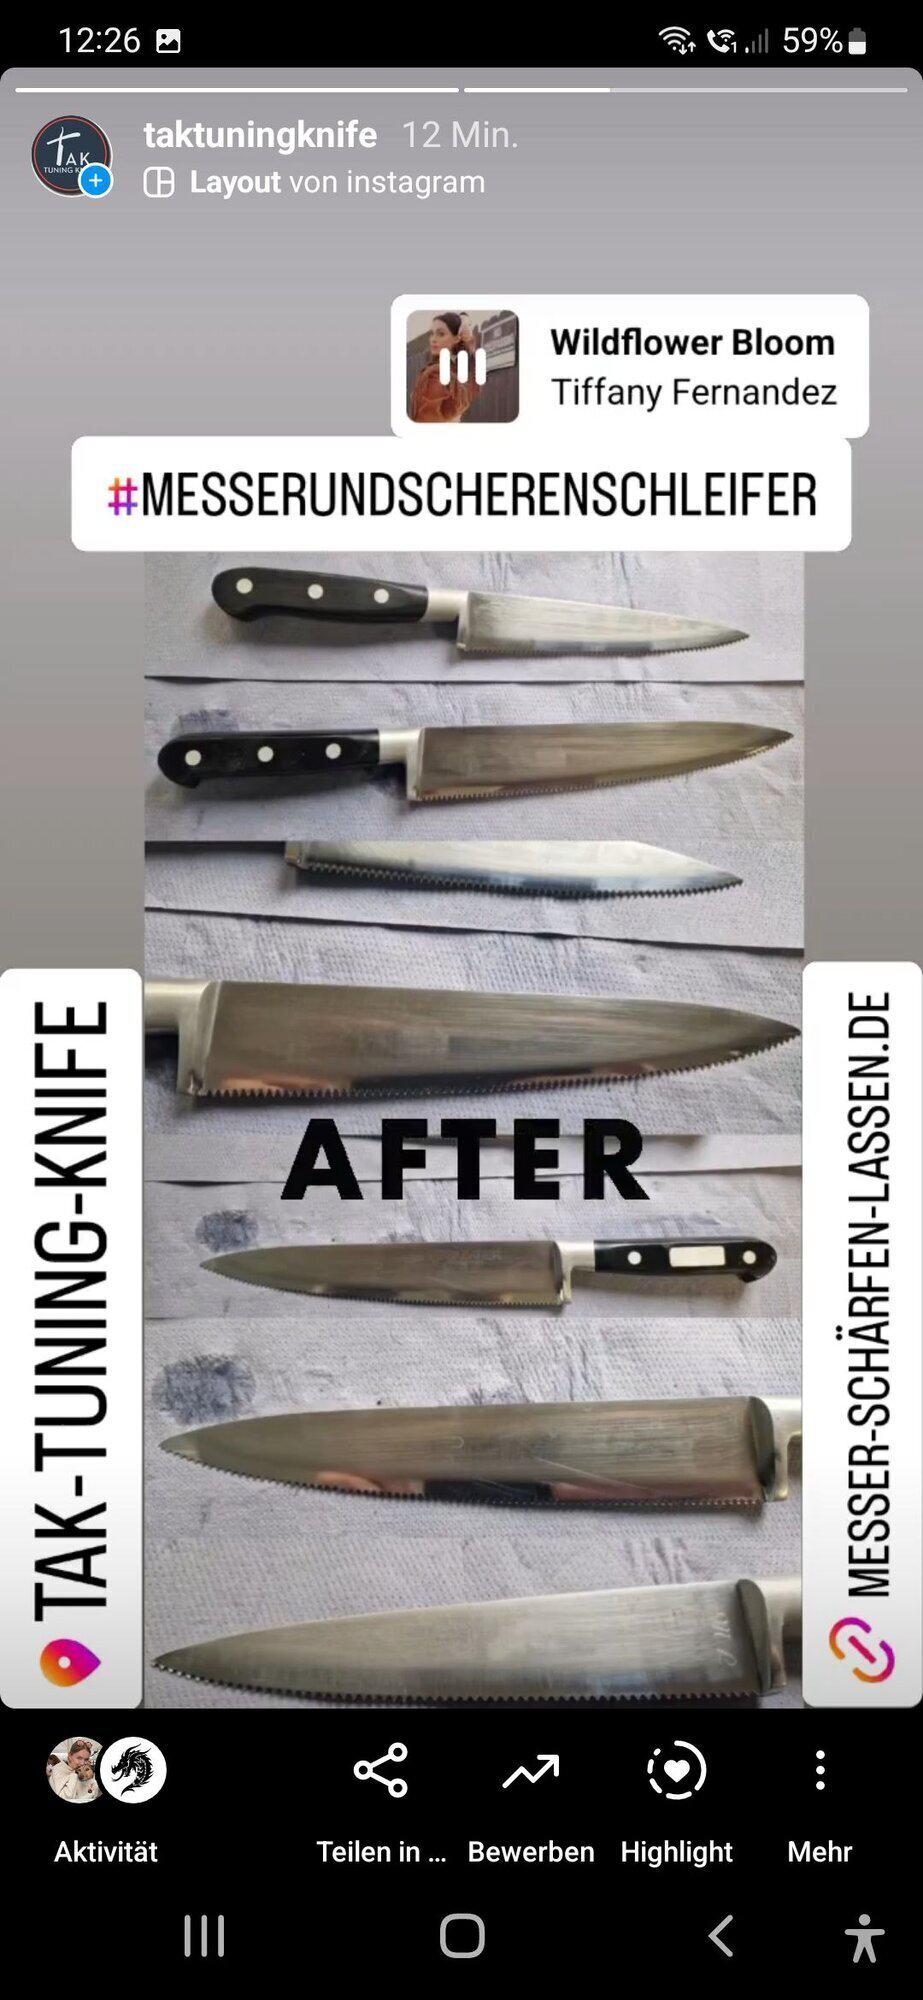 TAK-tuning-Knife, Further Straße 32 in Herzogenrath